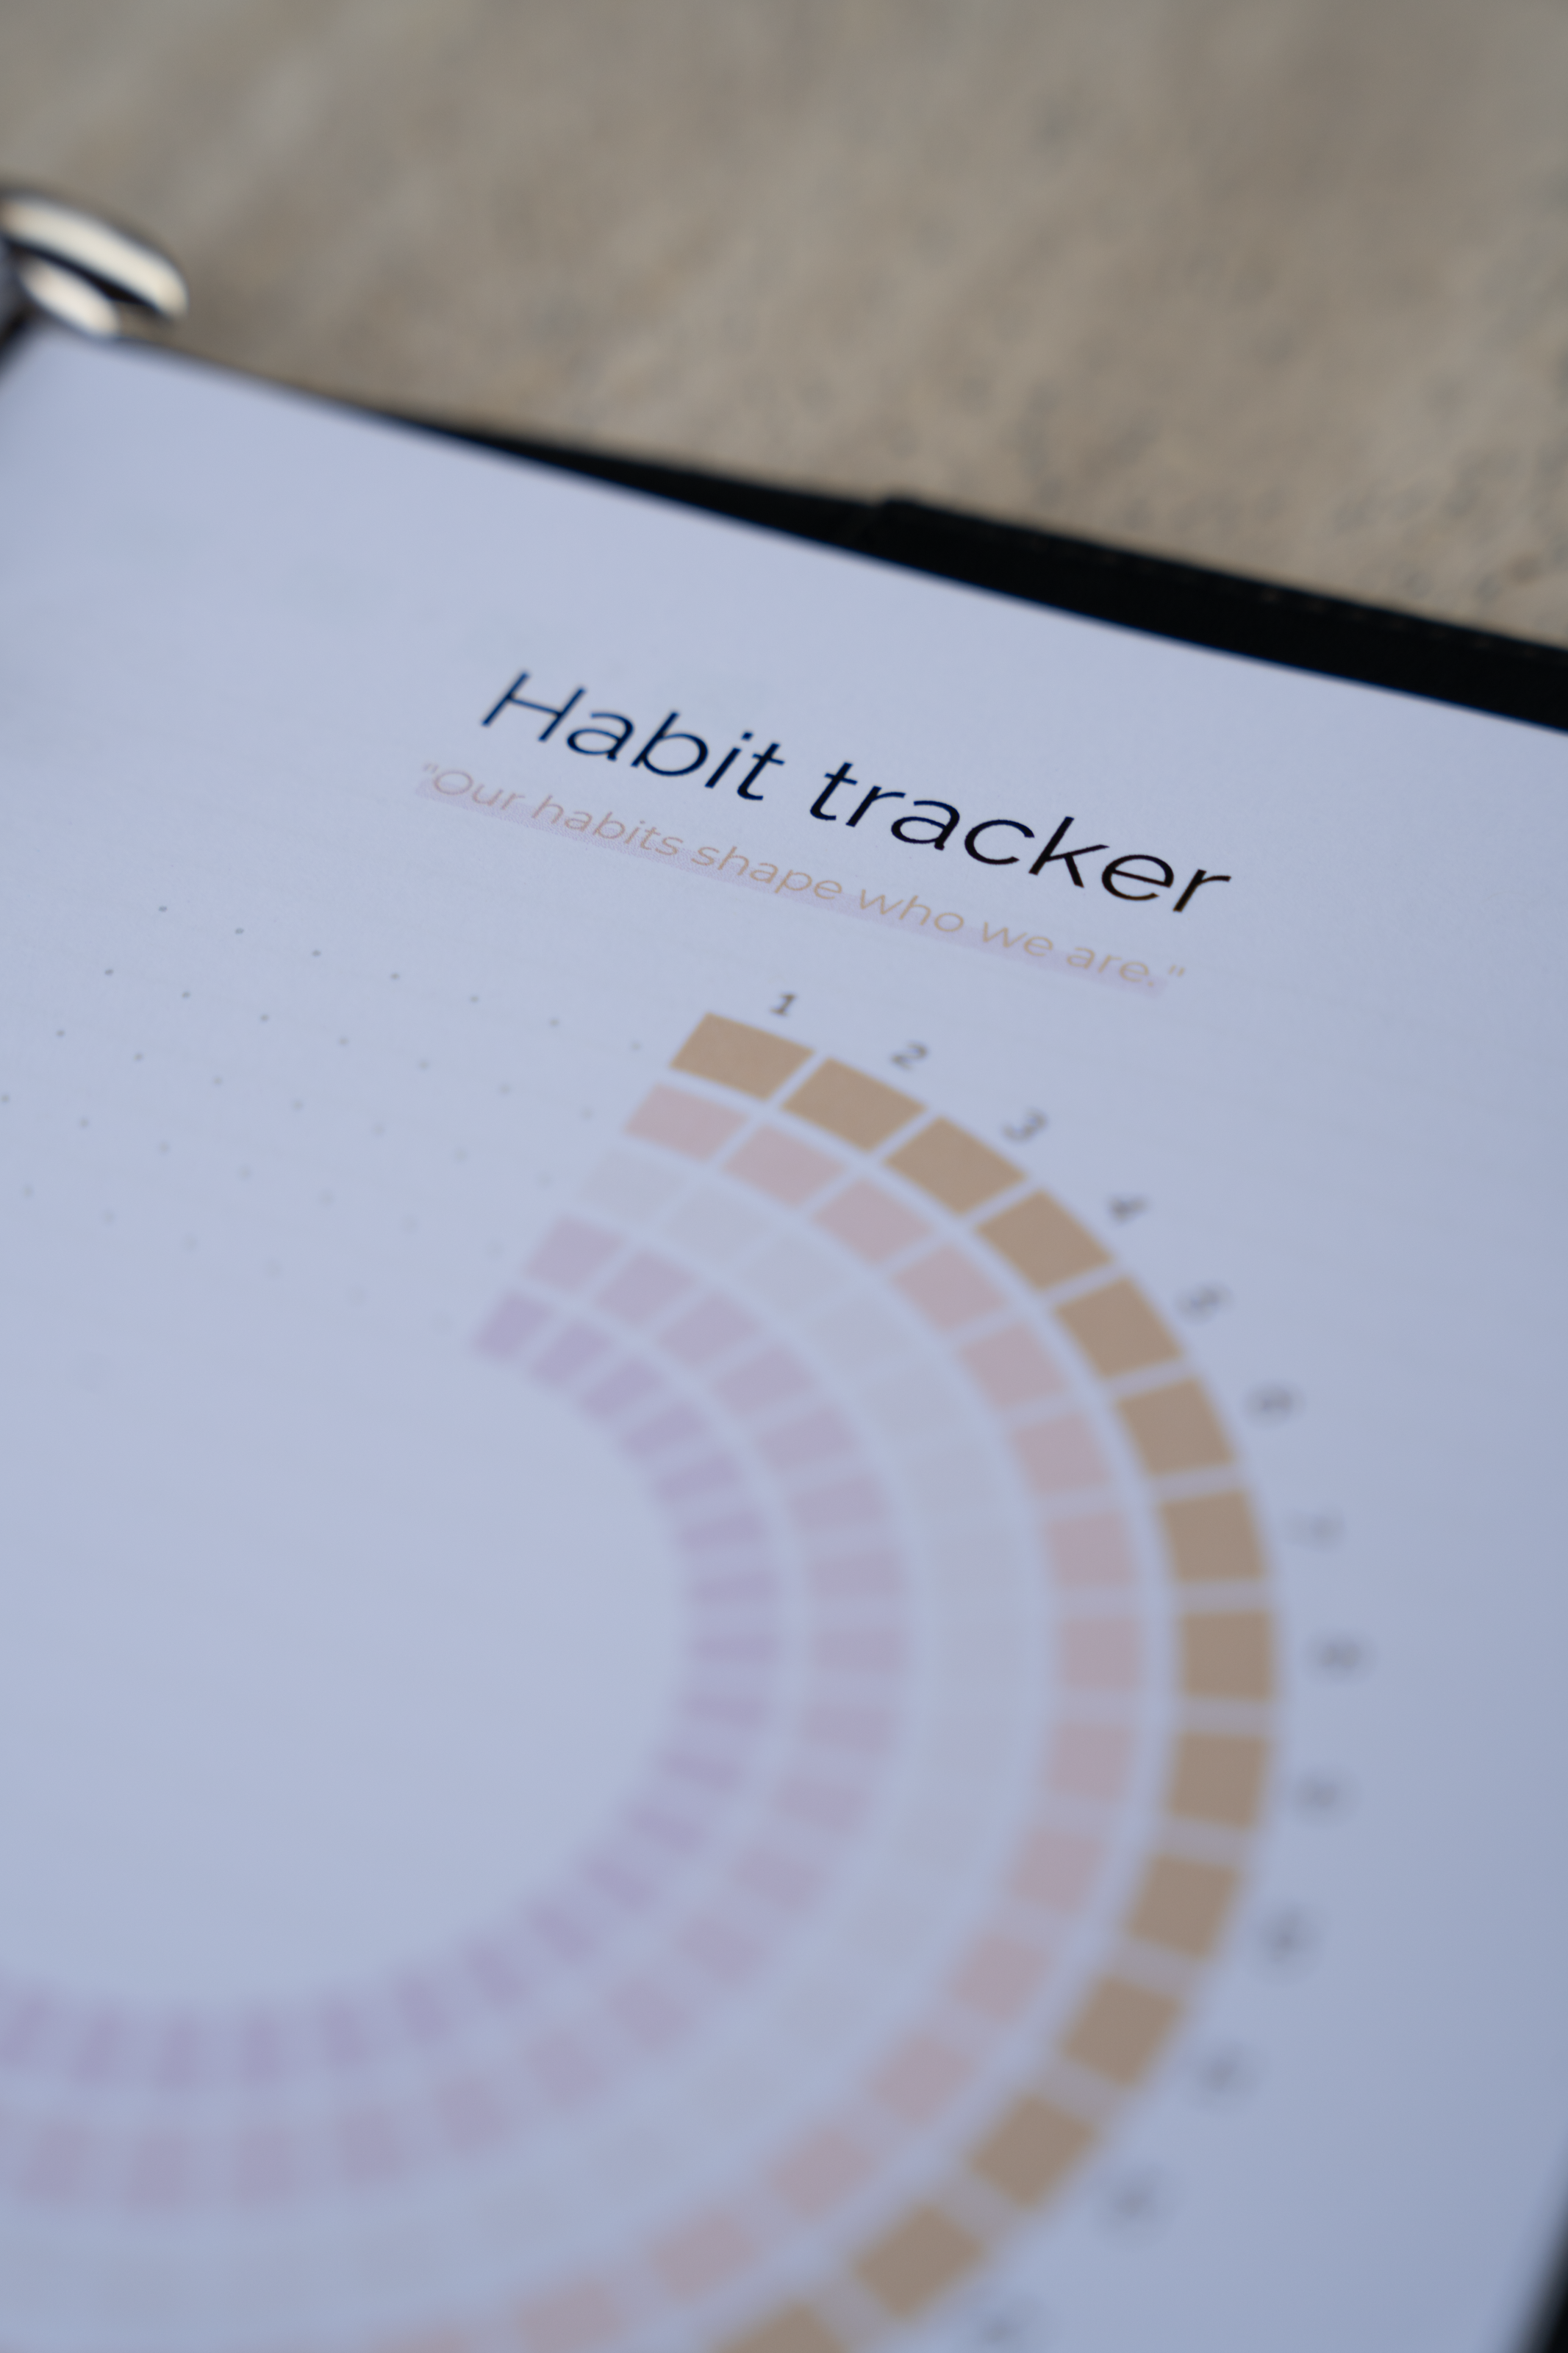 CIY: Habit Tracker